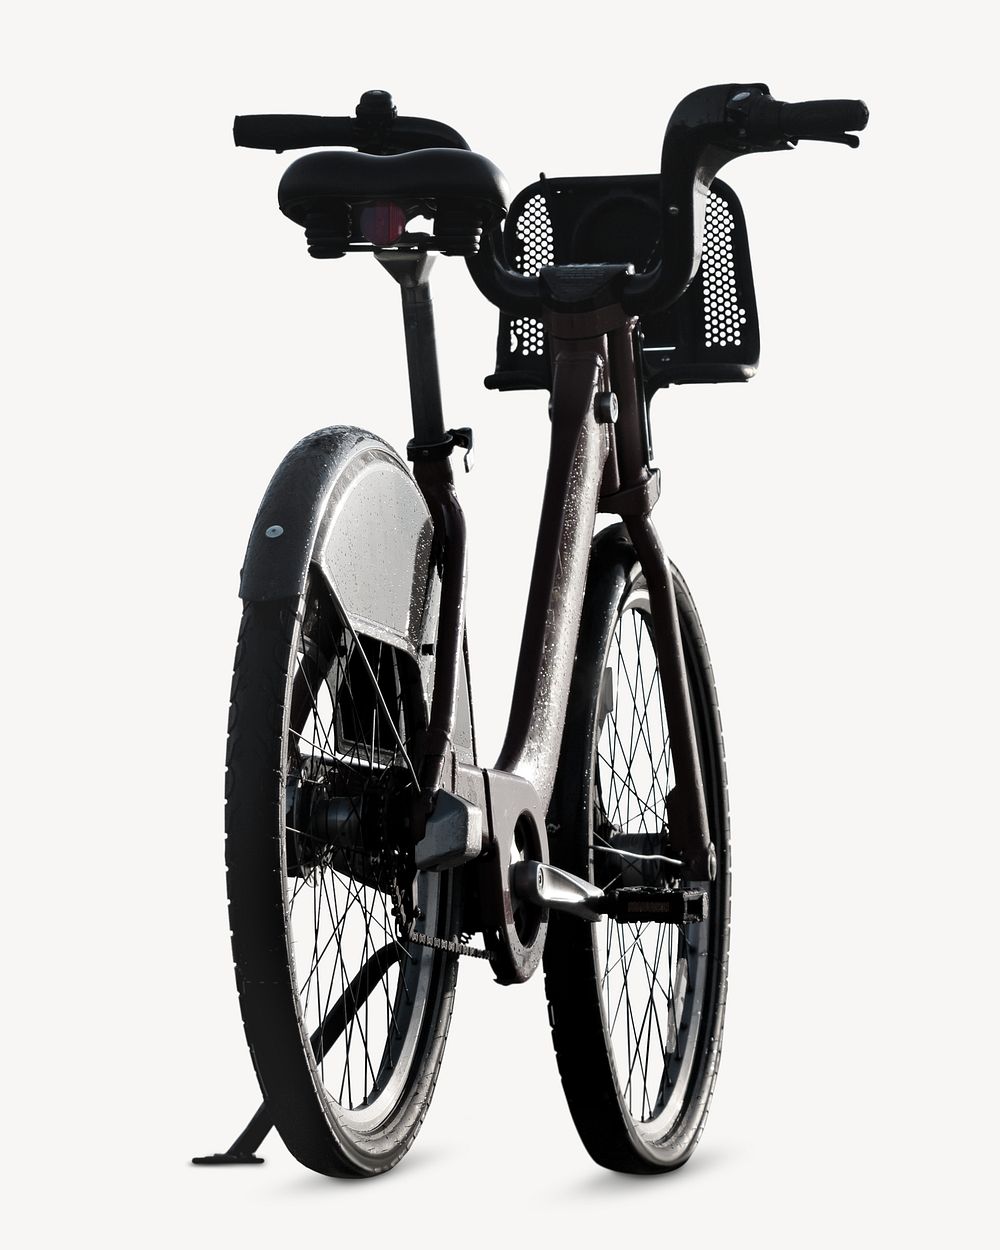 Black bicycle, isolated vehicle image